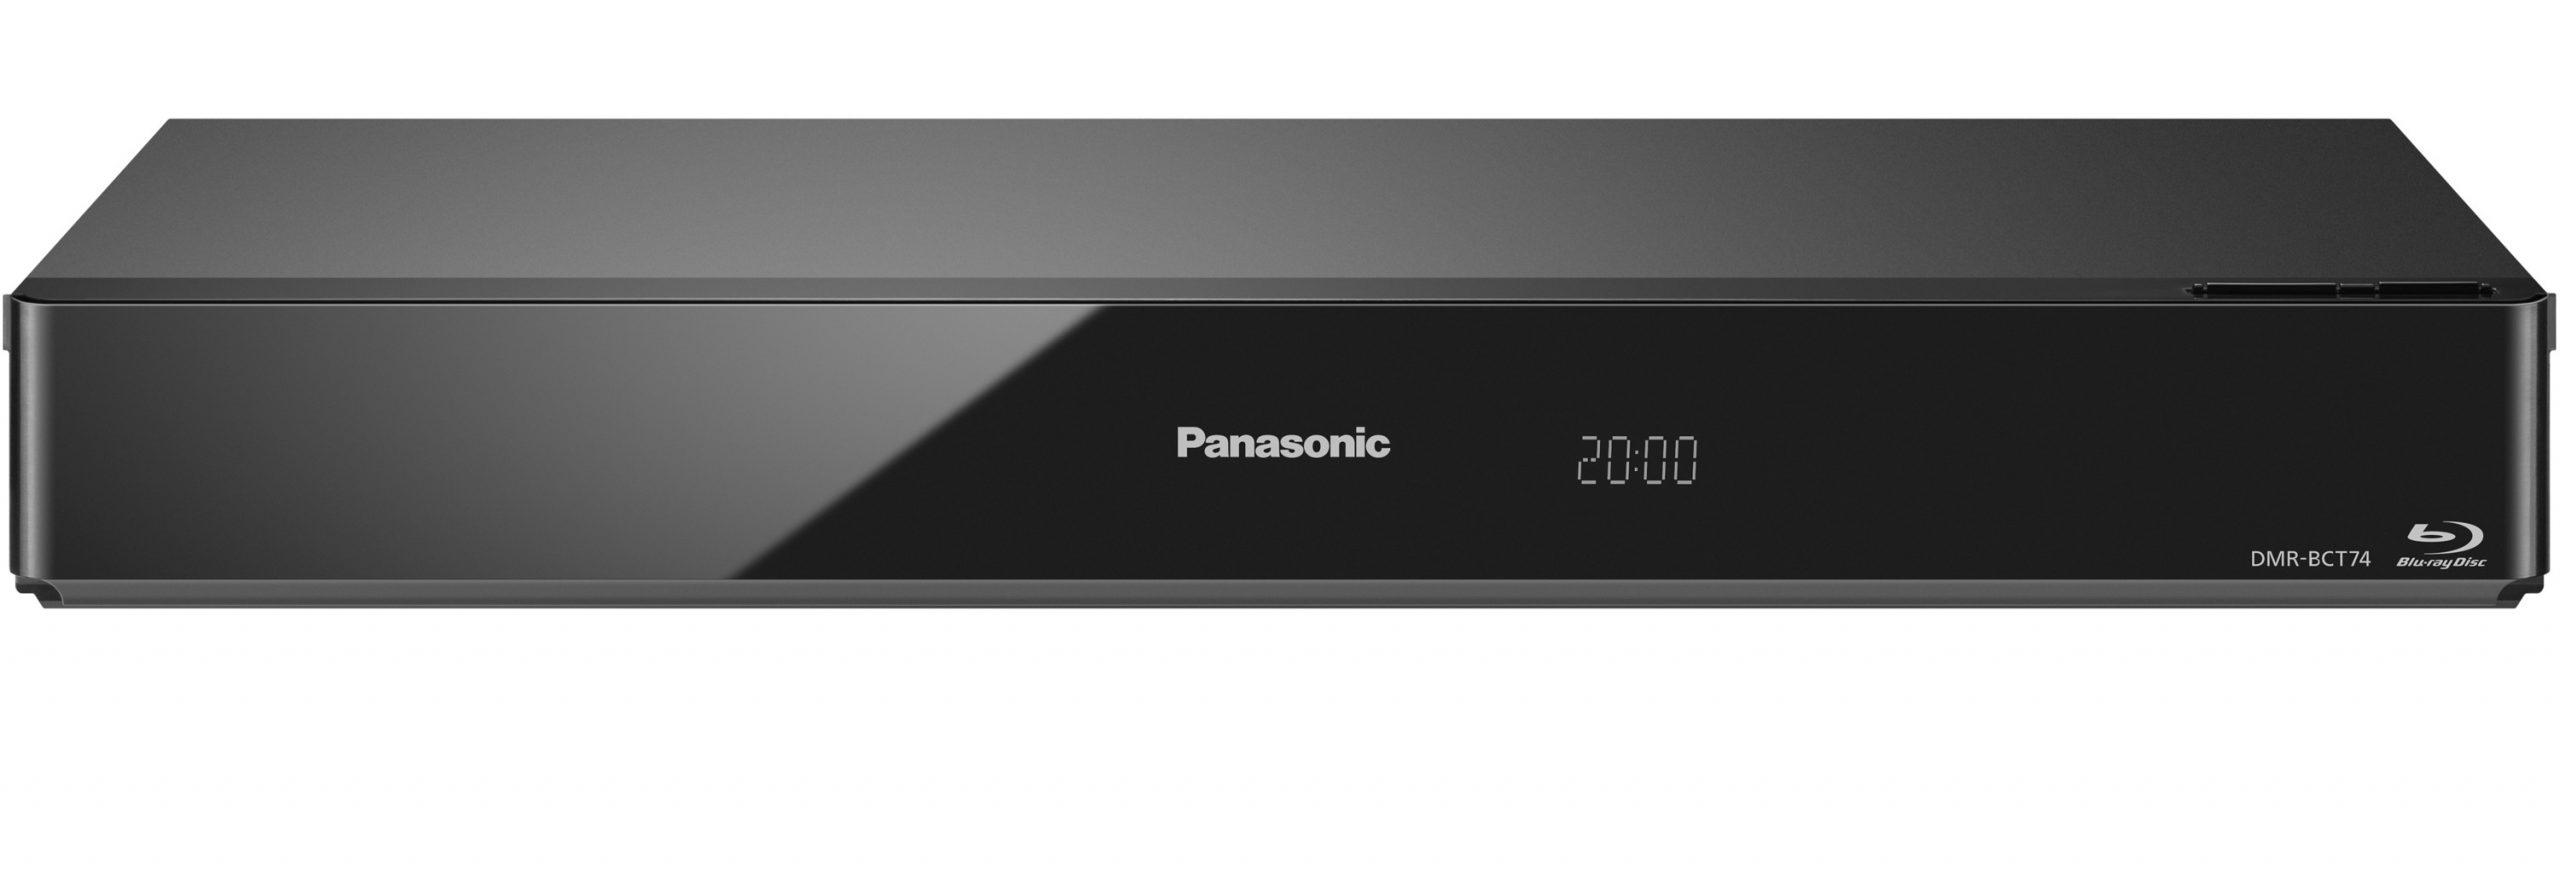 Panasonic DMR-BCT74 4K Skaalaava Blu-Ray & HD DVB-C Tallentava boksi